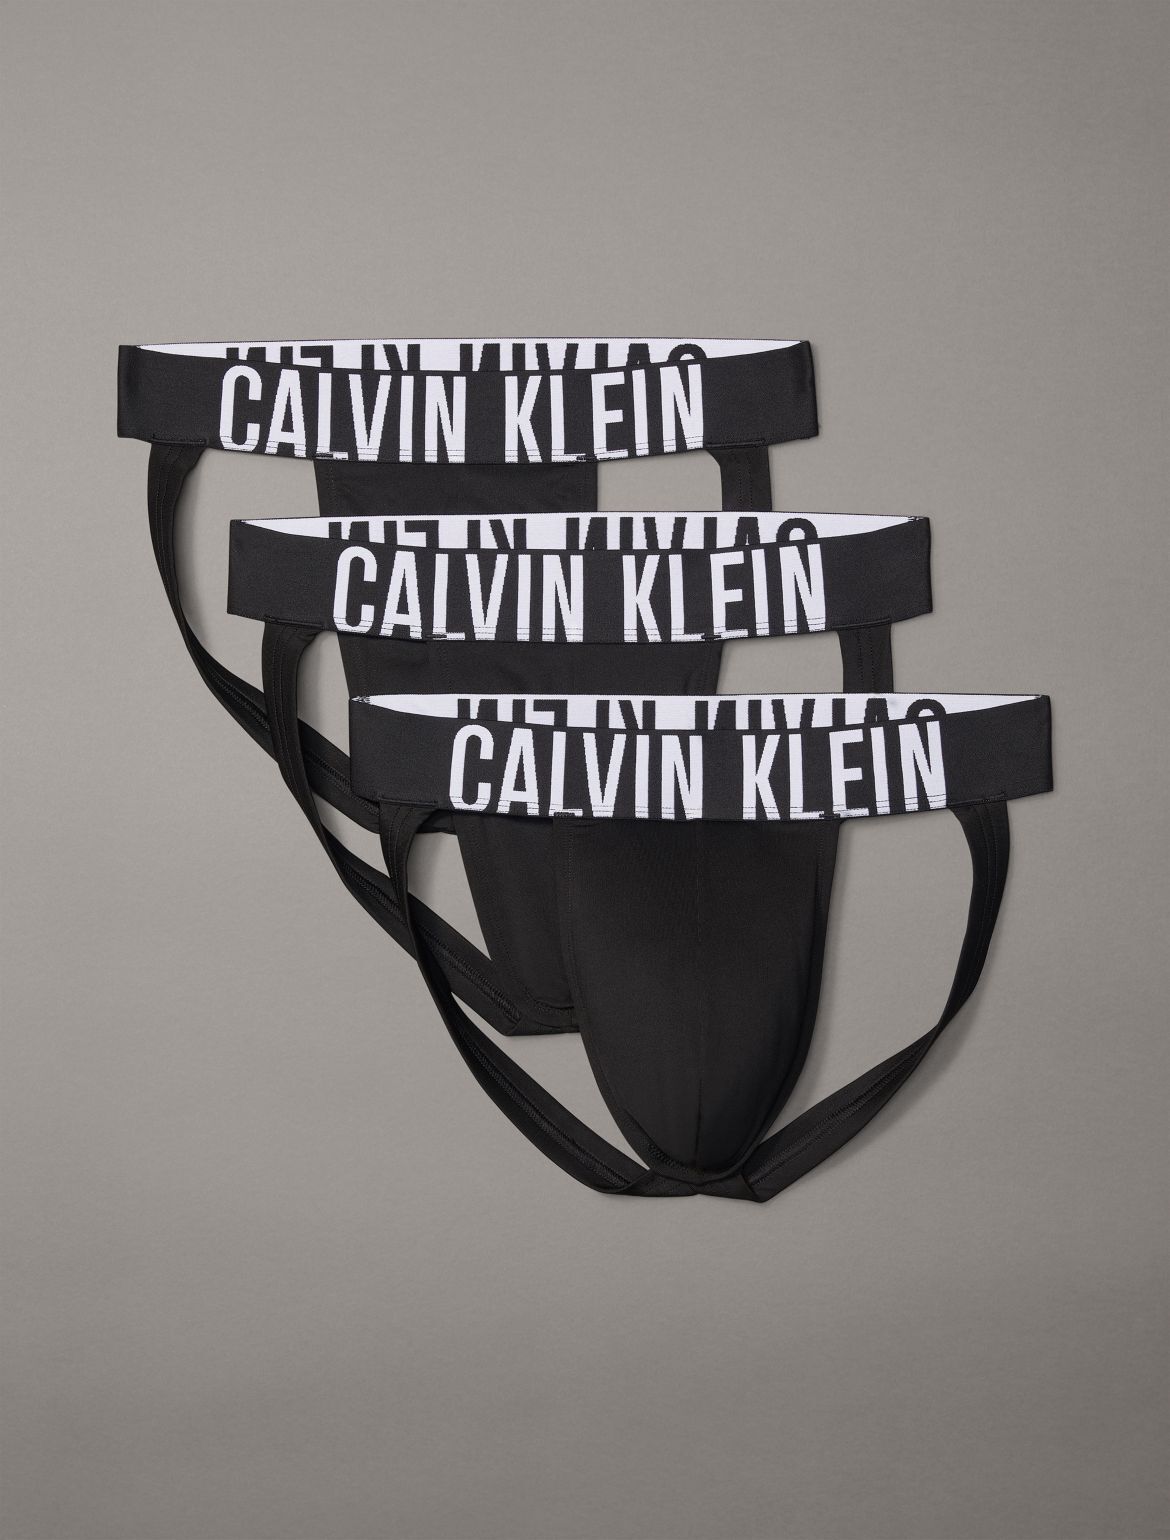 Calvin Klein Men's Intense Power Micro 3-Pack Jock Strap - Black - L